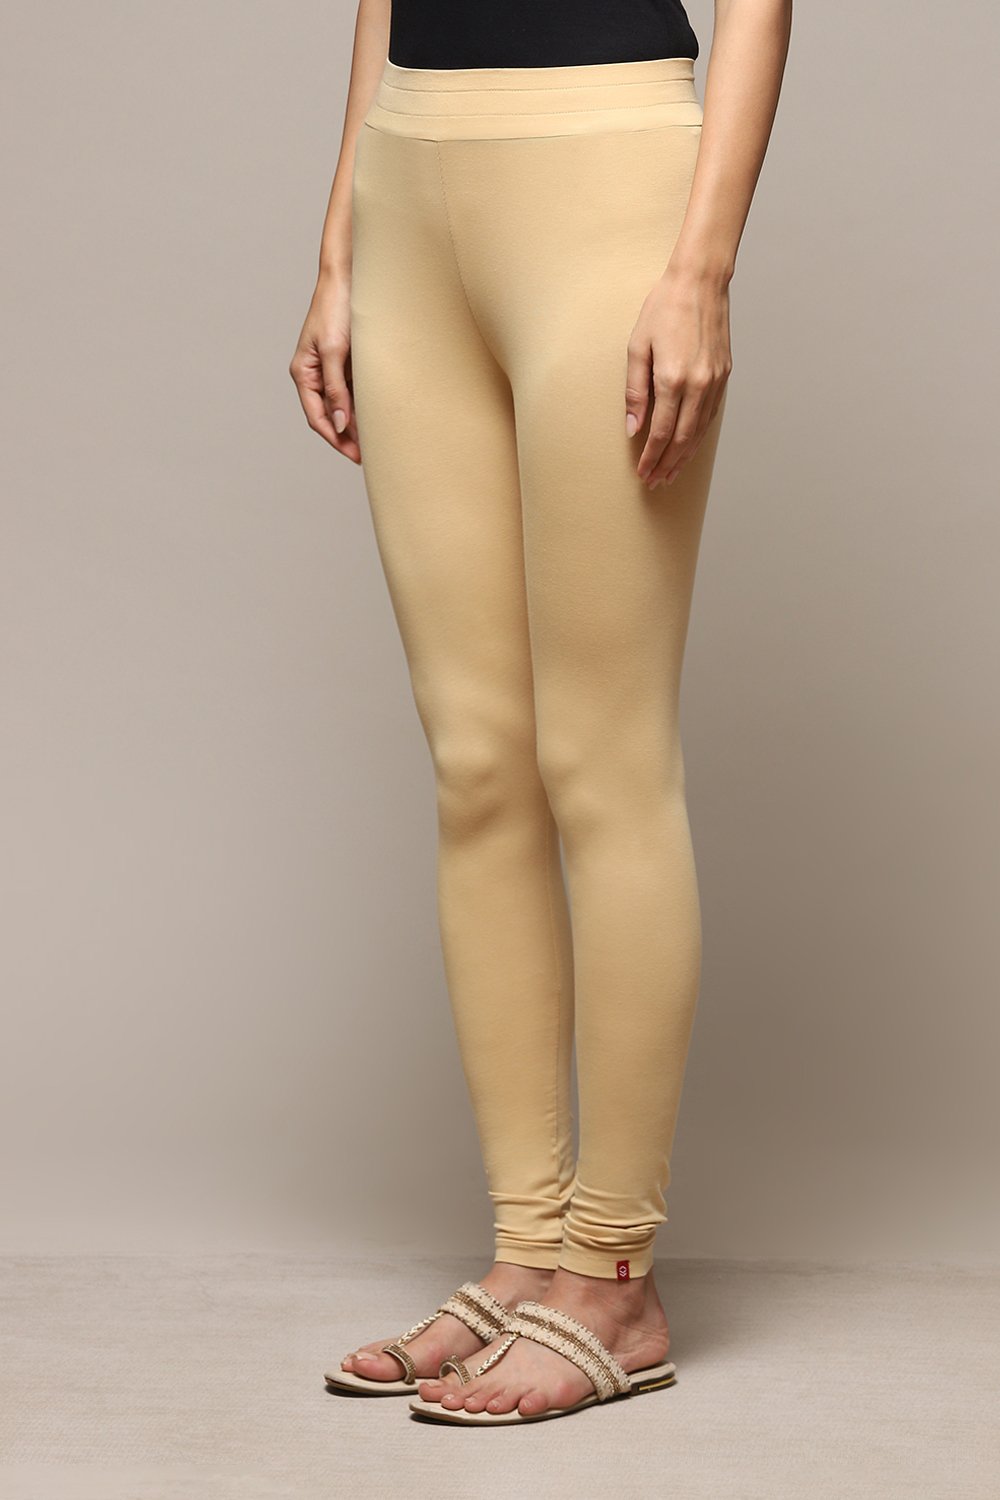 Royal Premium Quality Cotton Leggings for Women XL (Beige) at Rs